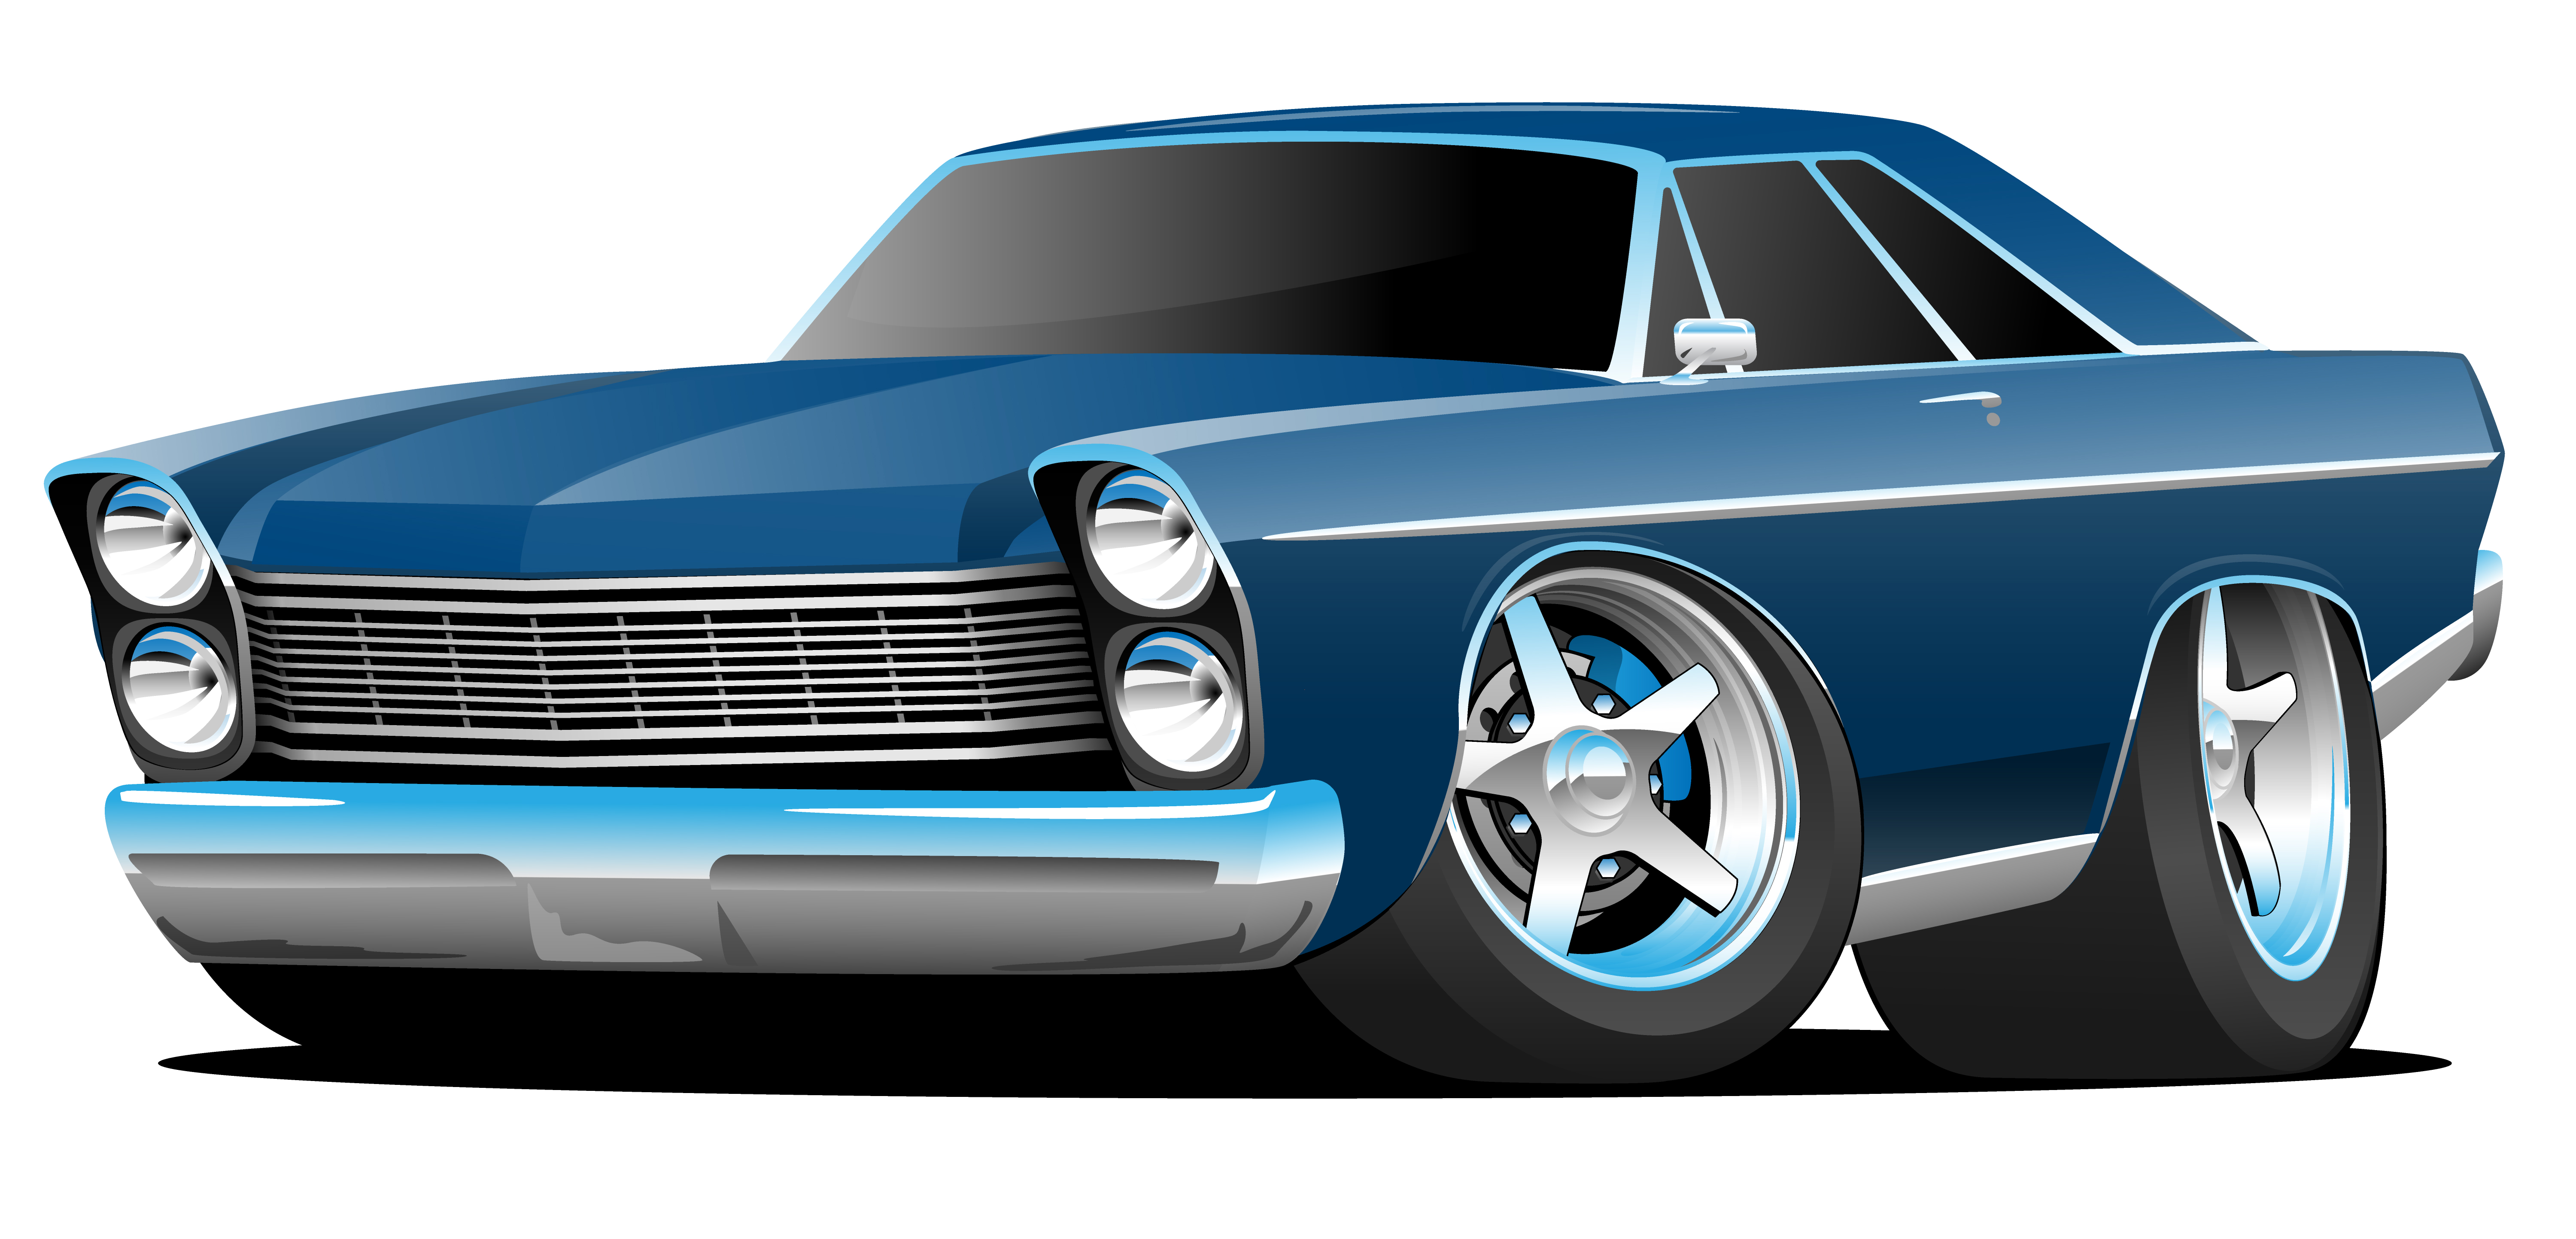 Classic Sixties Style Big American Muscle Car Cartoon ...